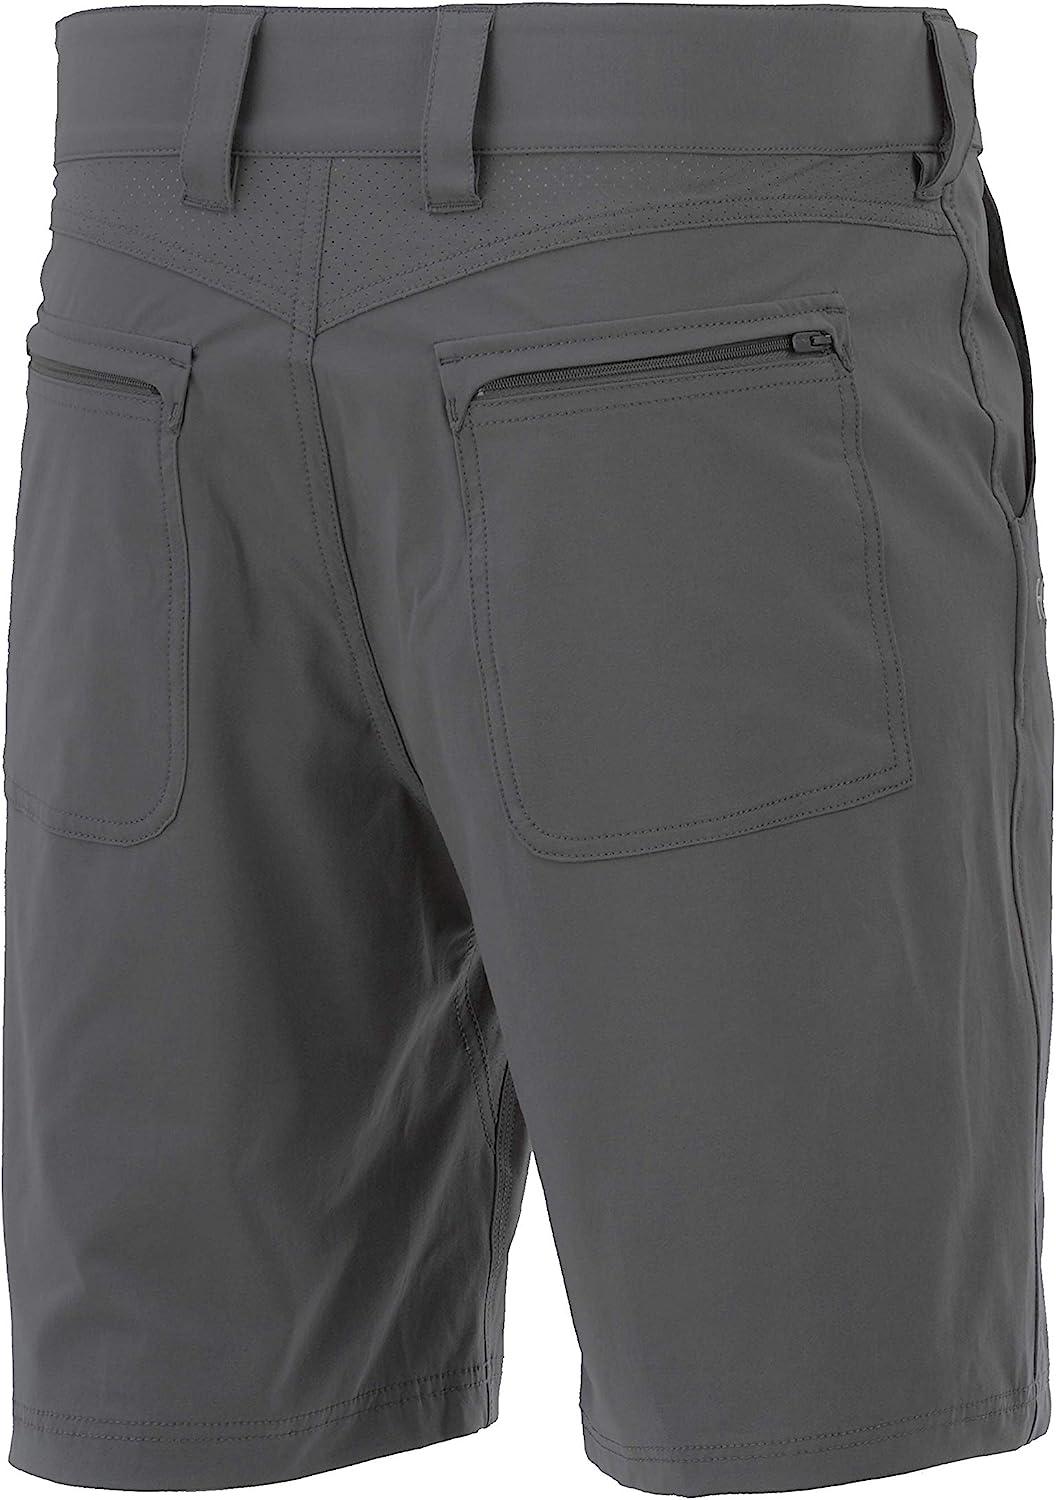 Huk Fishing Shorts Adult Medium Black Cargo Zip Pockets Stretch